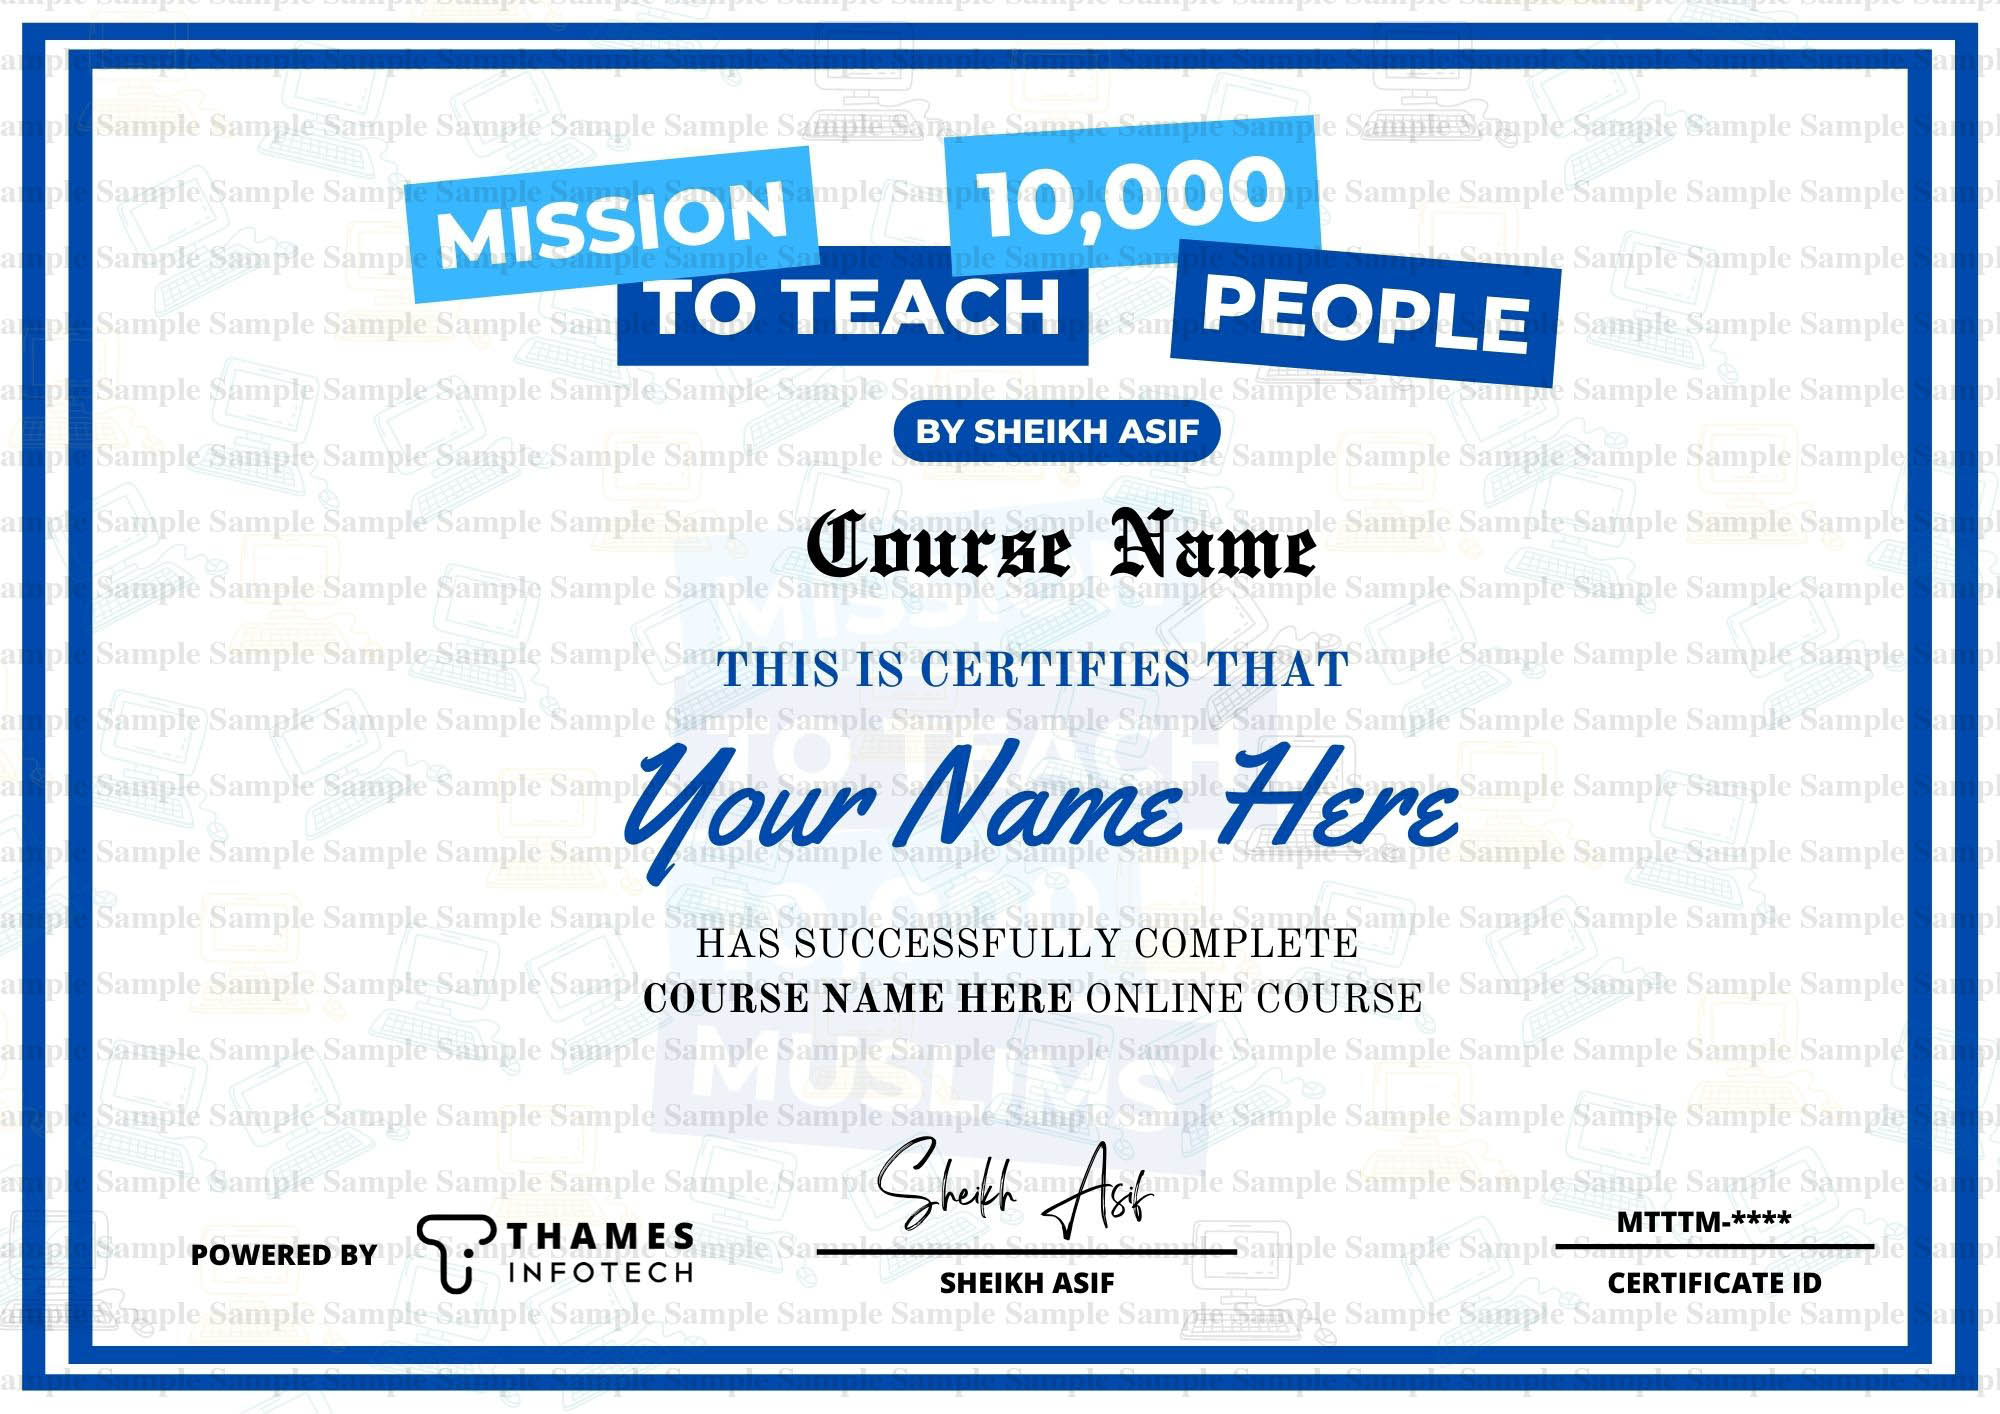 Mision to teach certificate.jpg